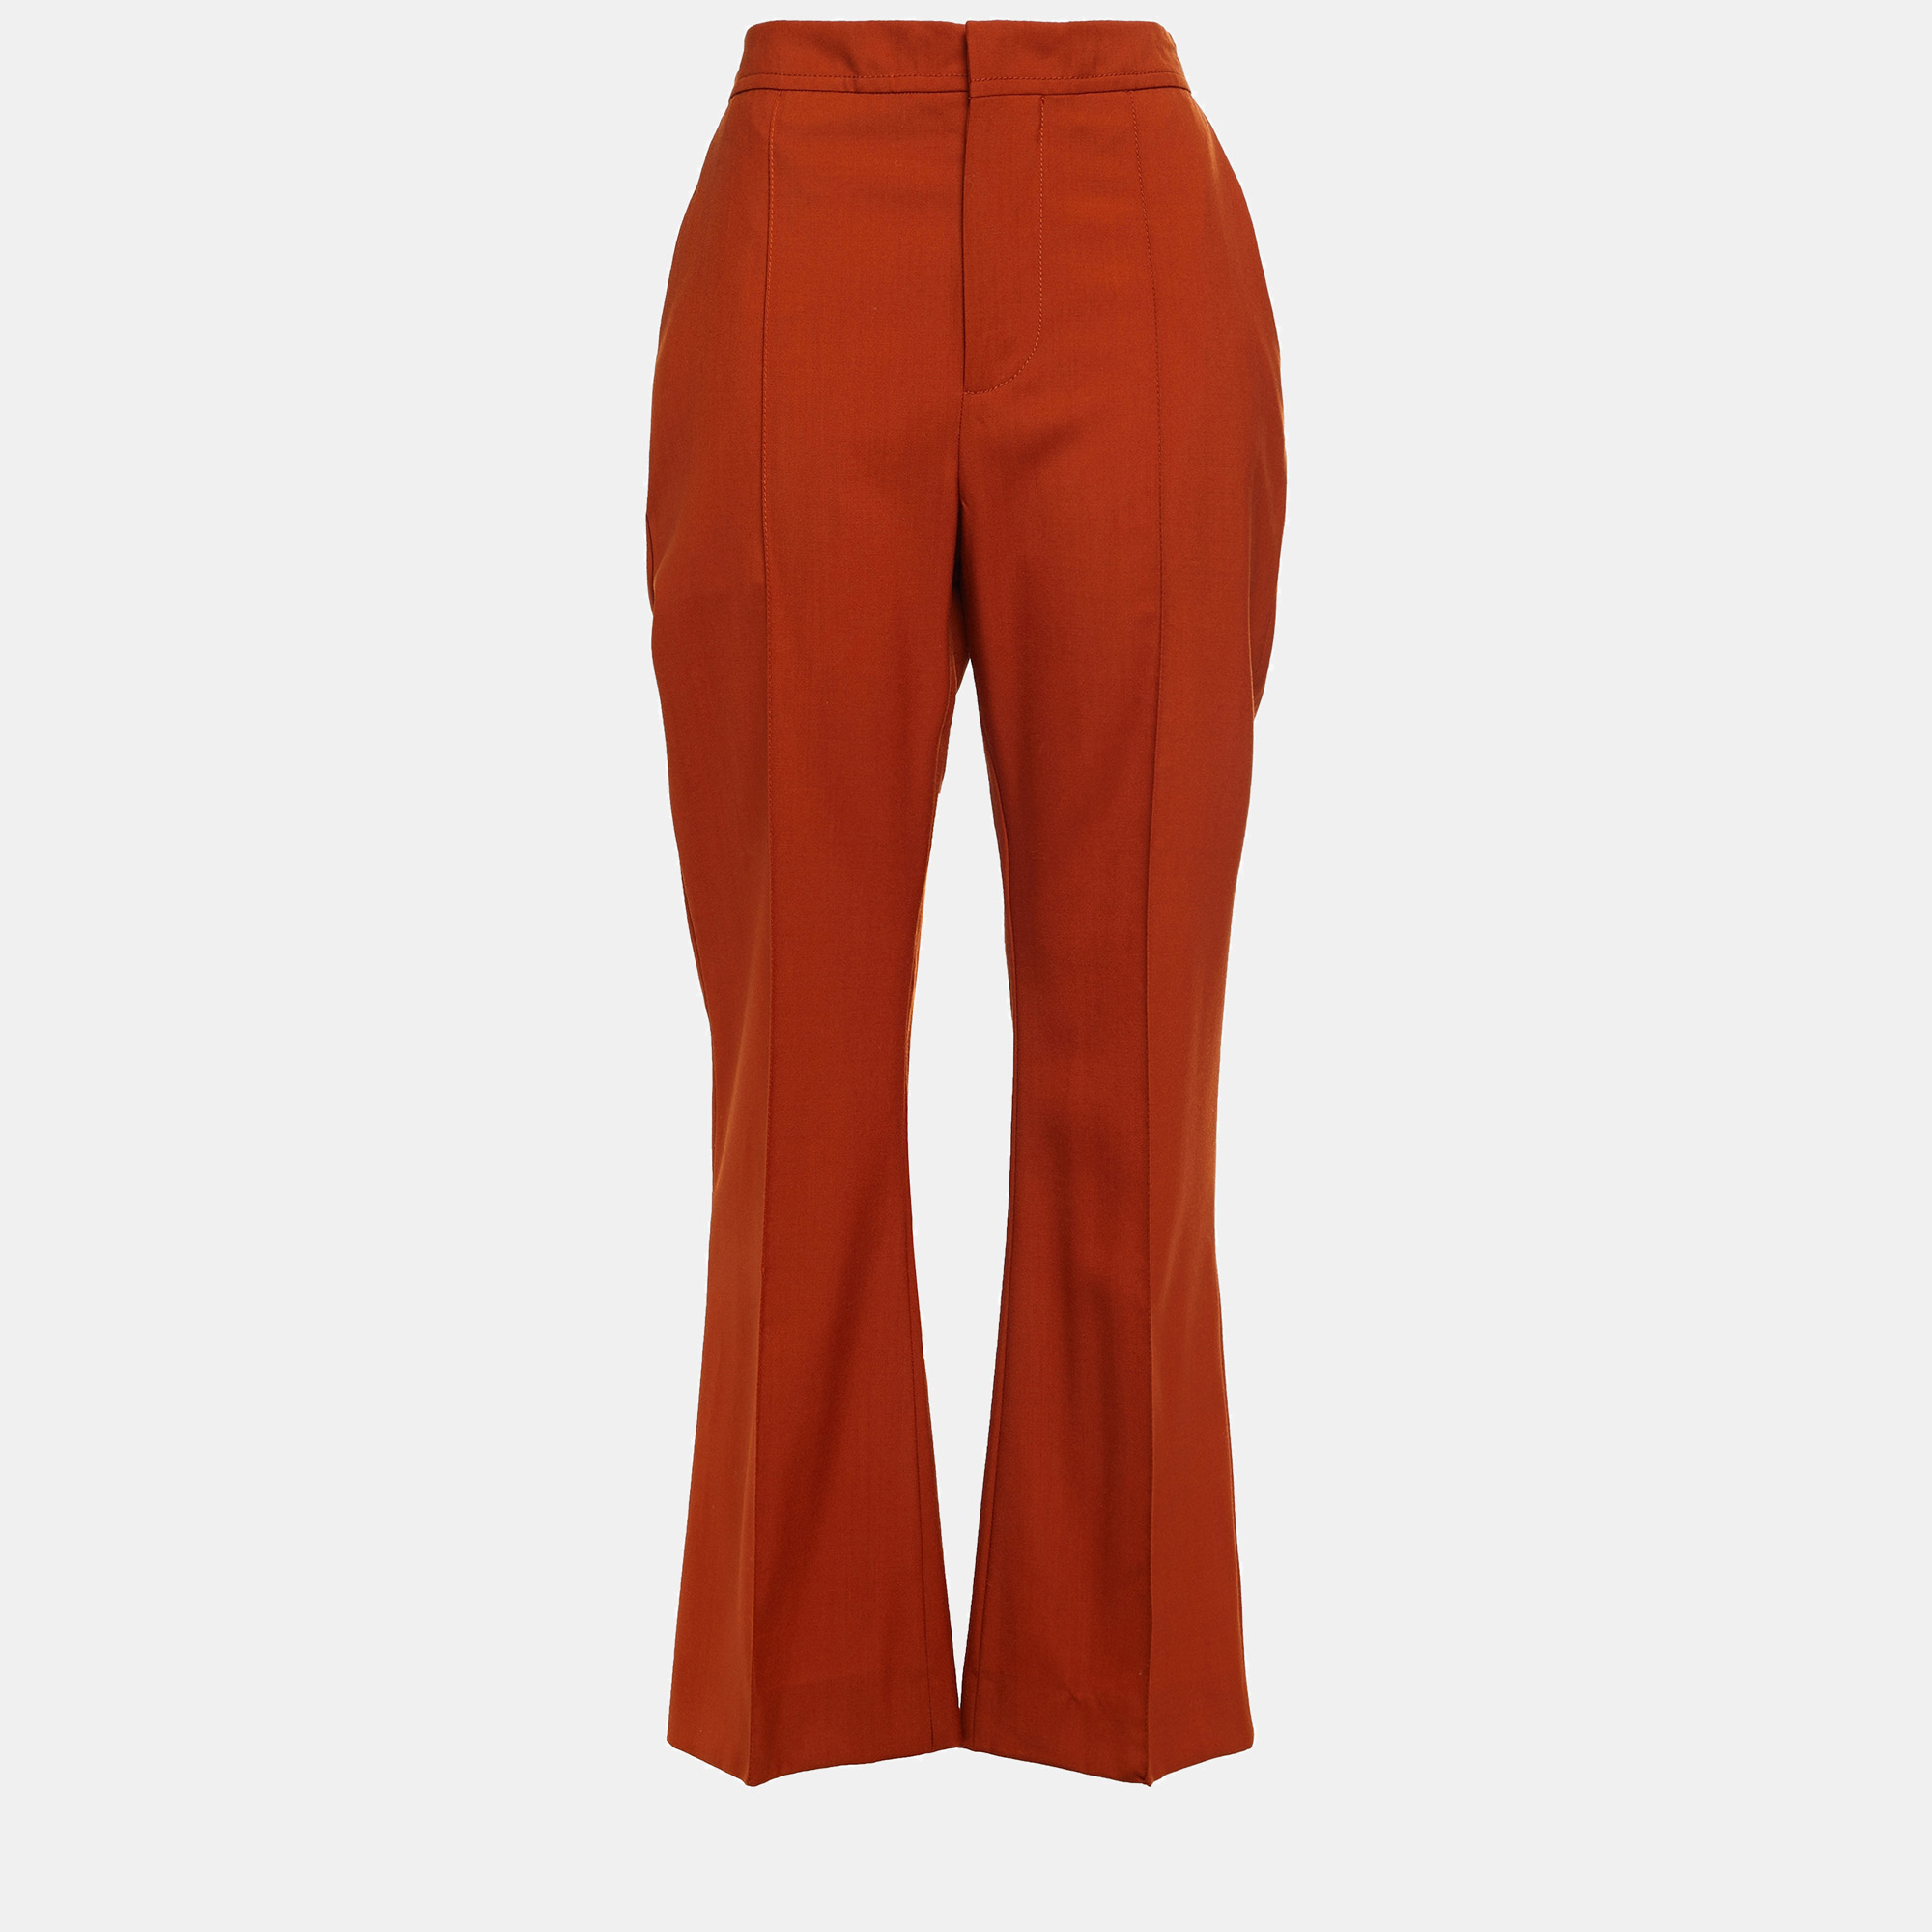 Marni orange virgin wool flared pants size 40